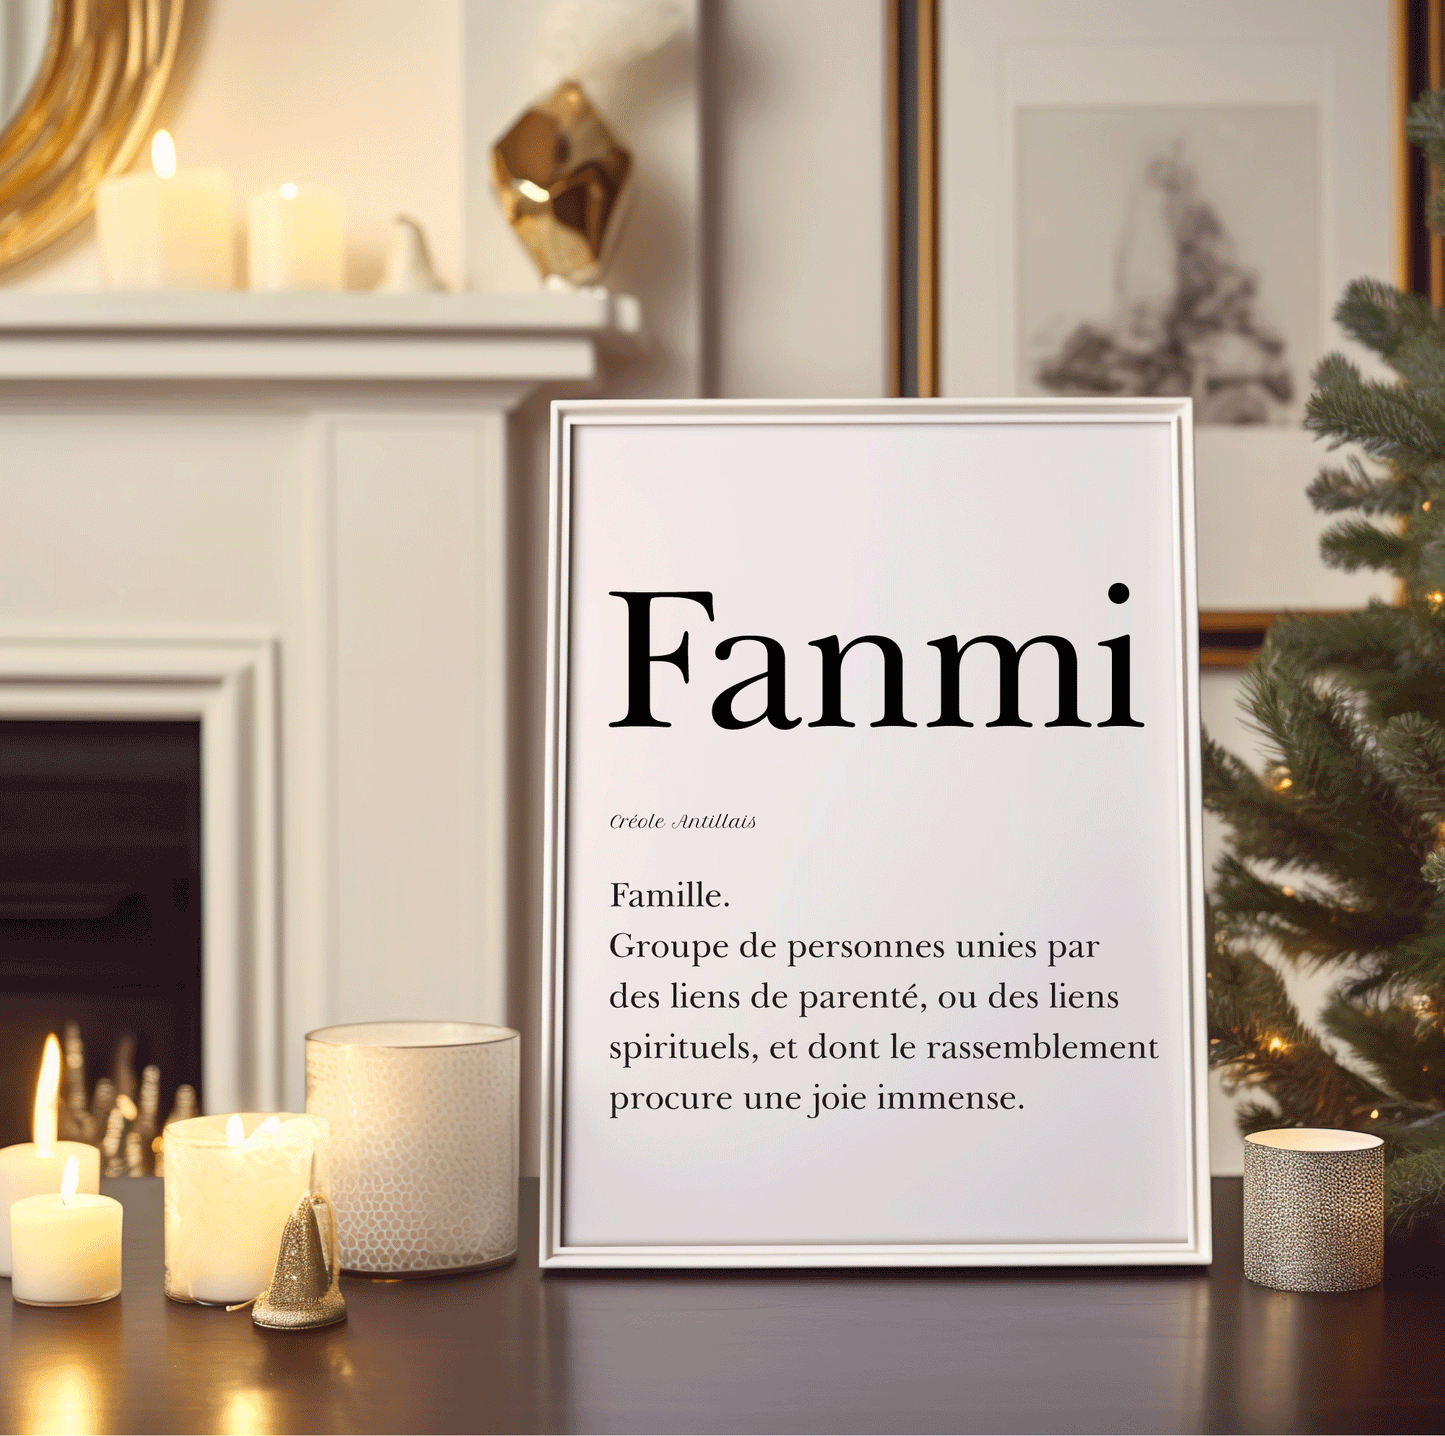 Family in Antillean Creole - "Fanmi"